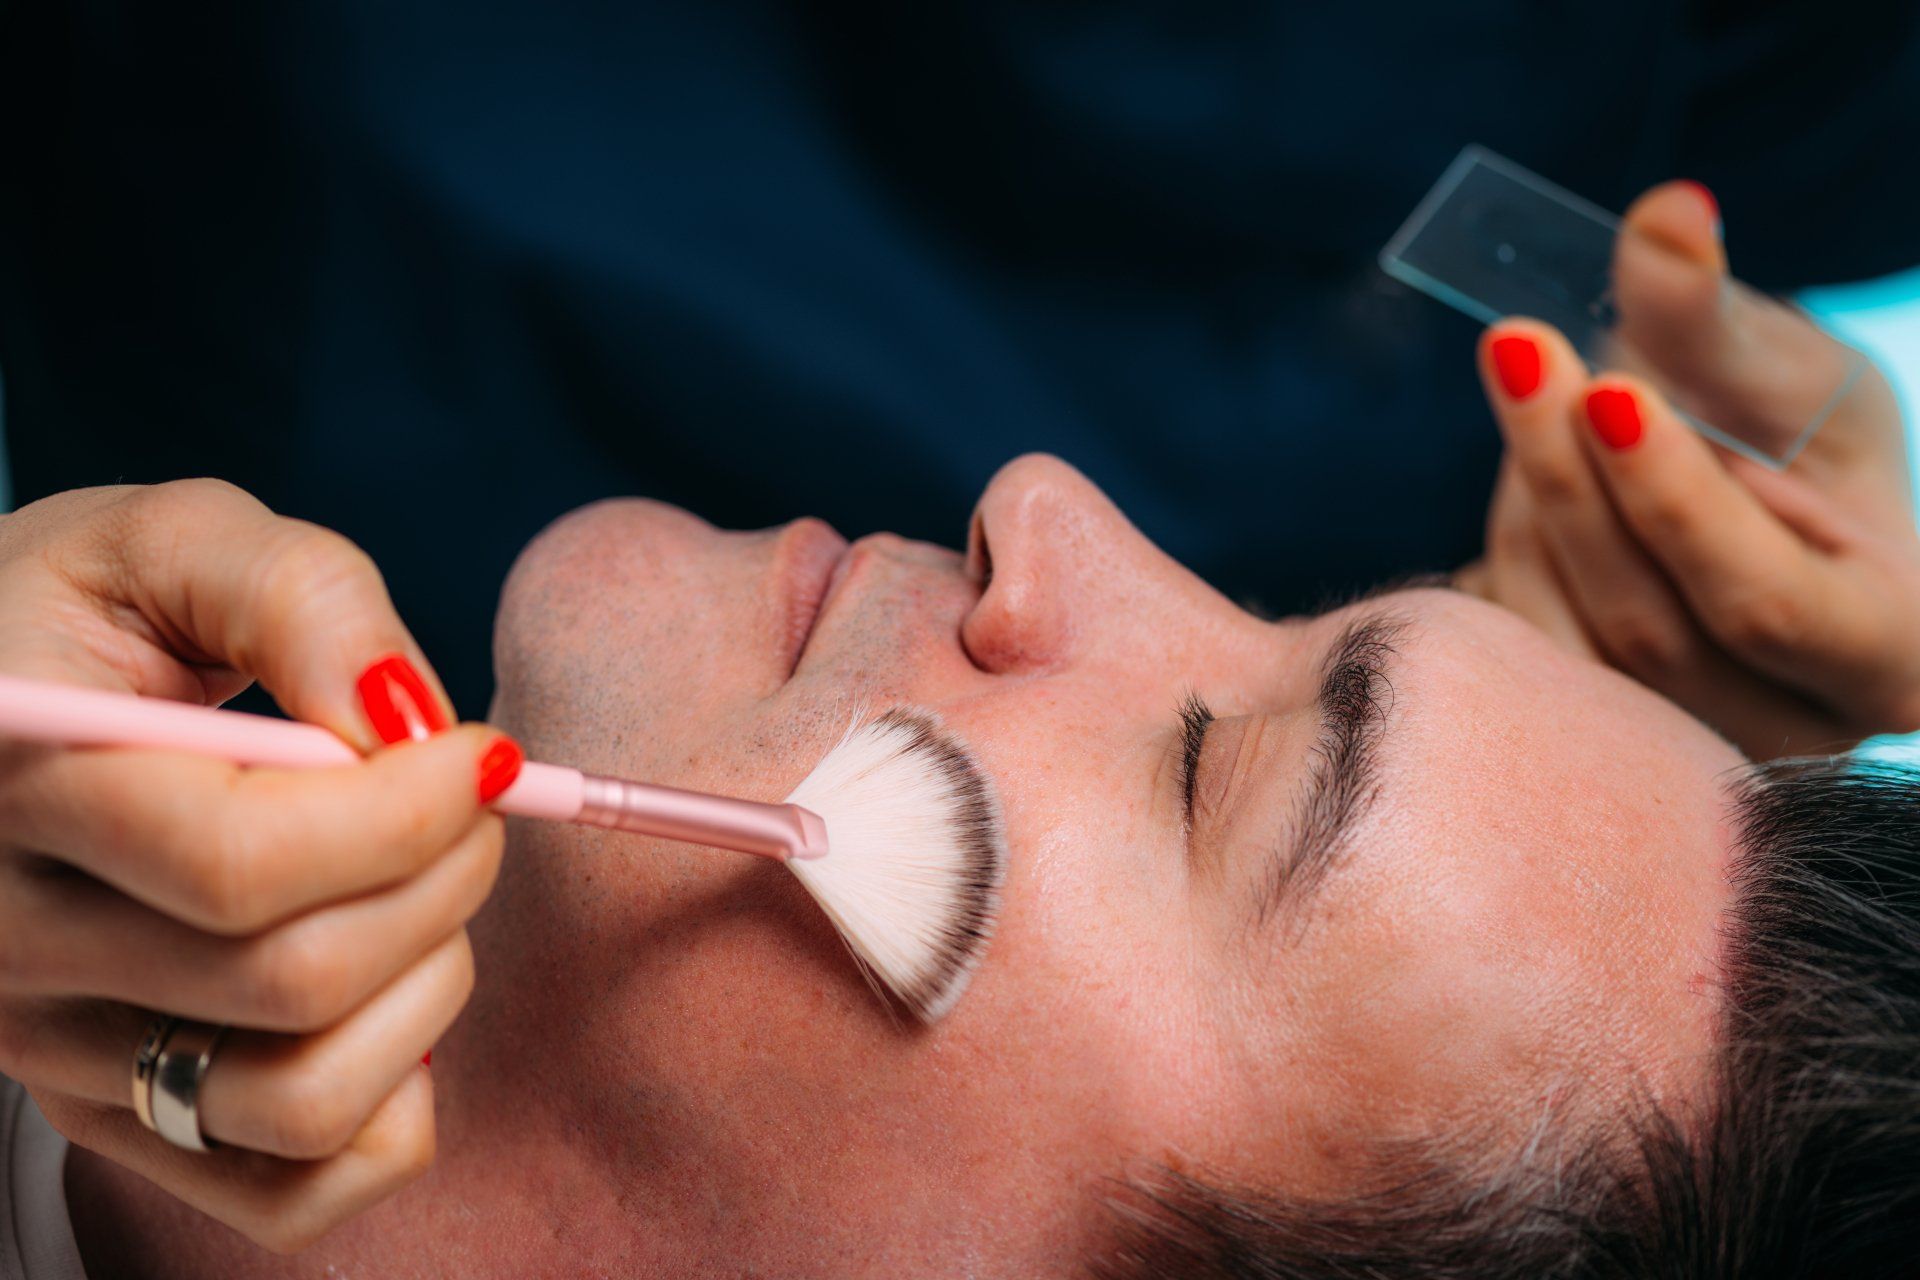 A man getting facial treatments